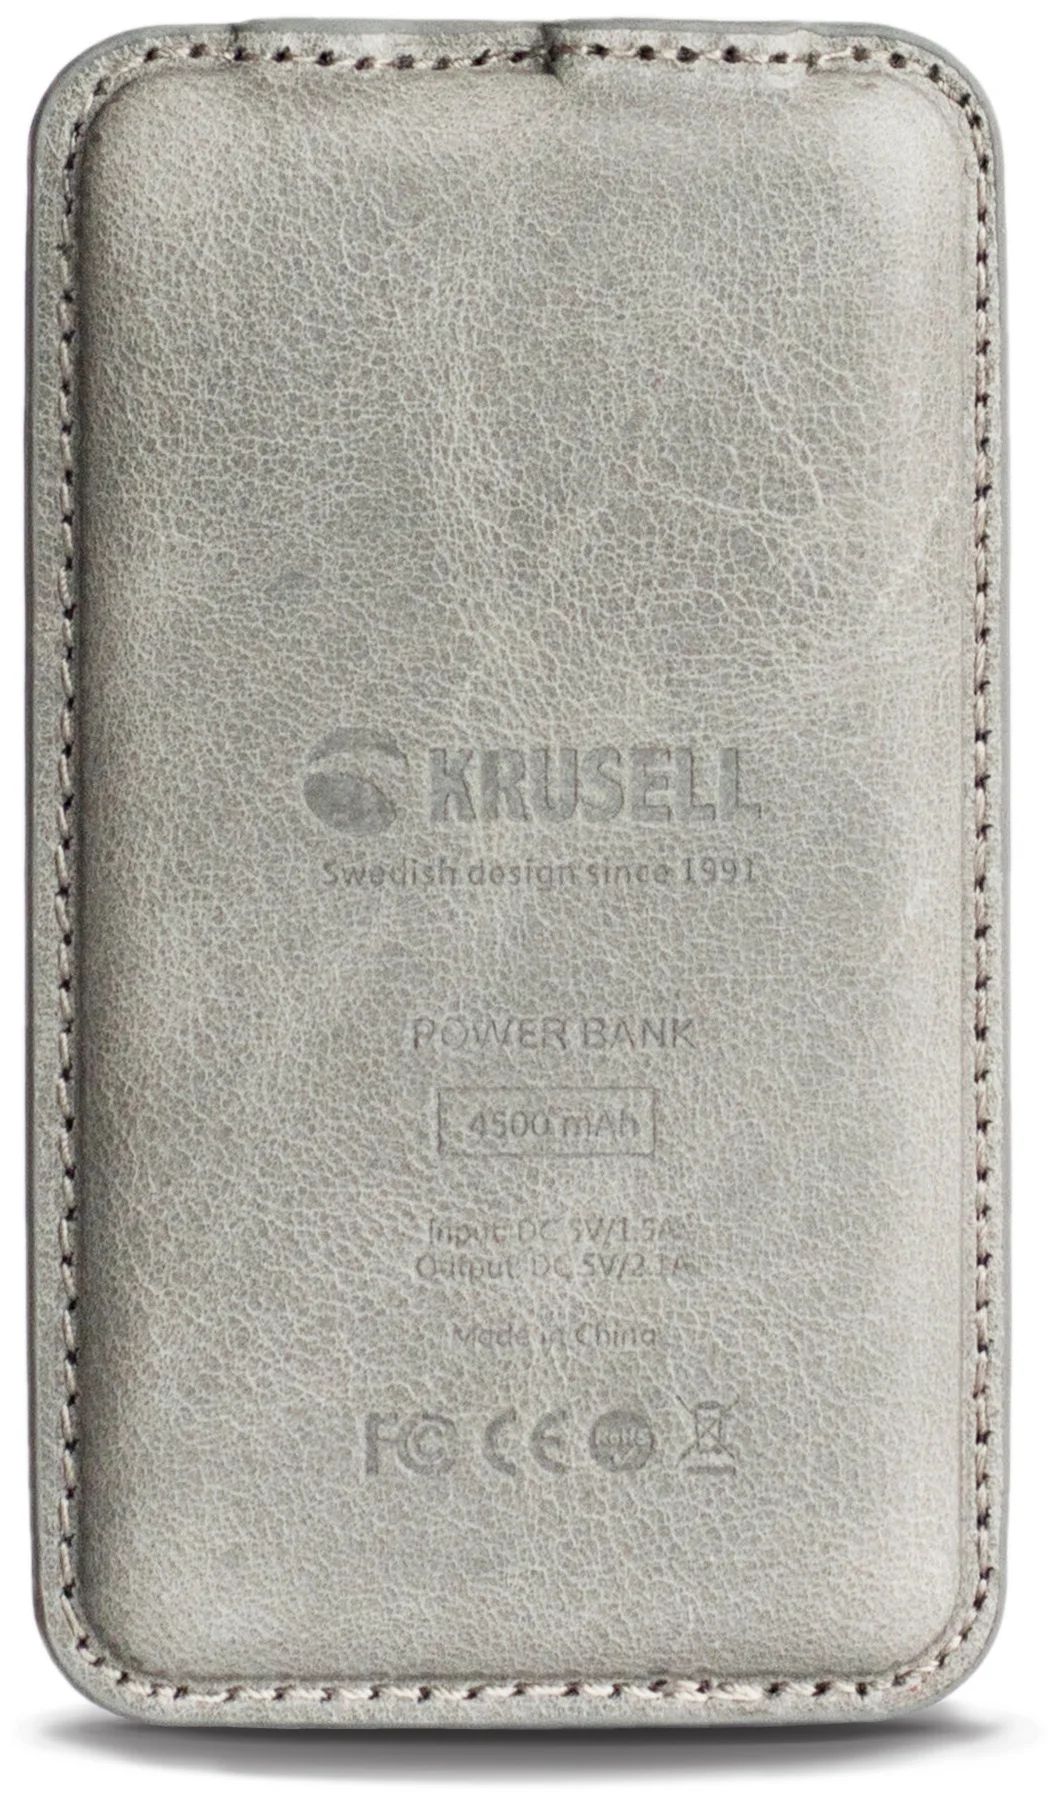 Krusell "Sunne" - выходы: USB